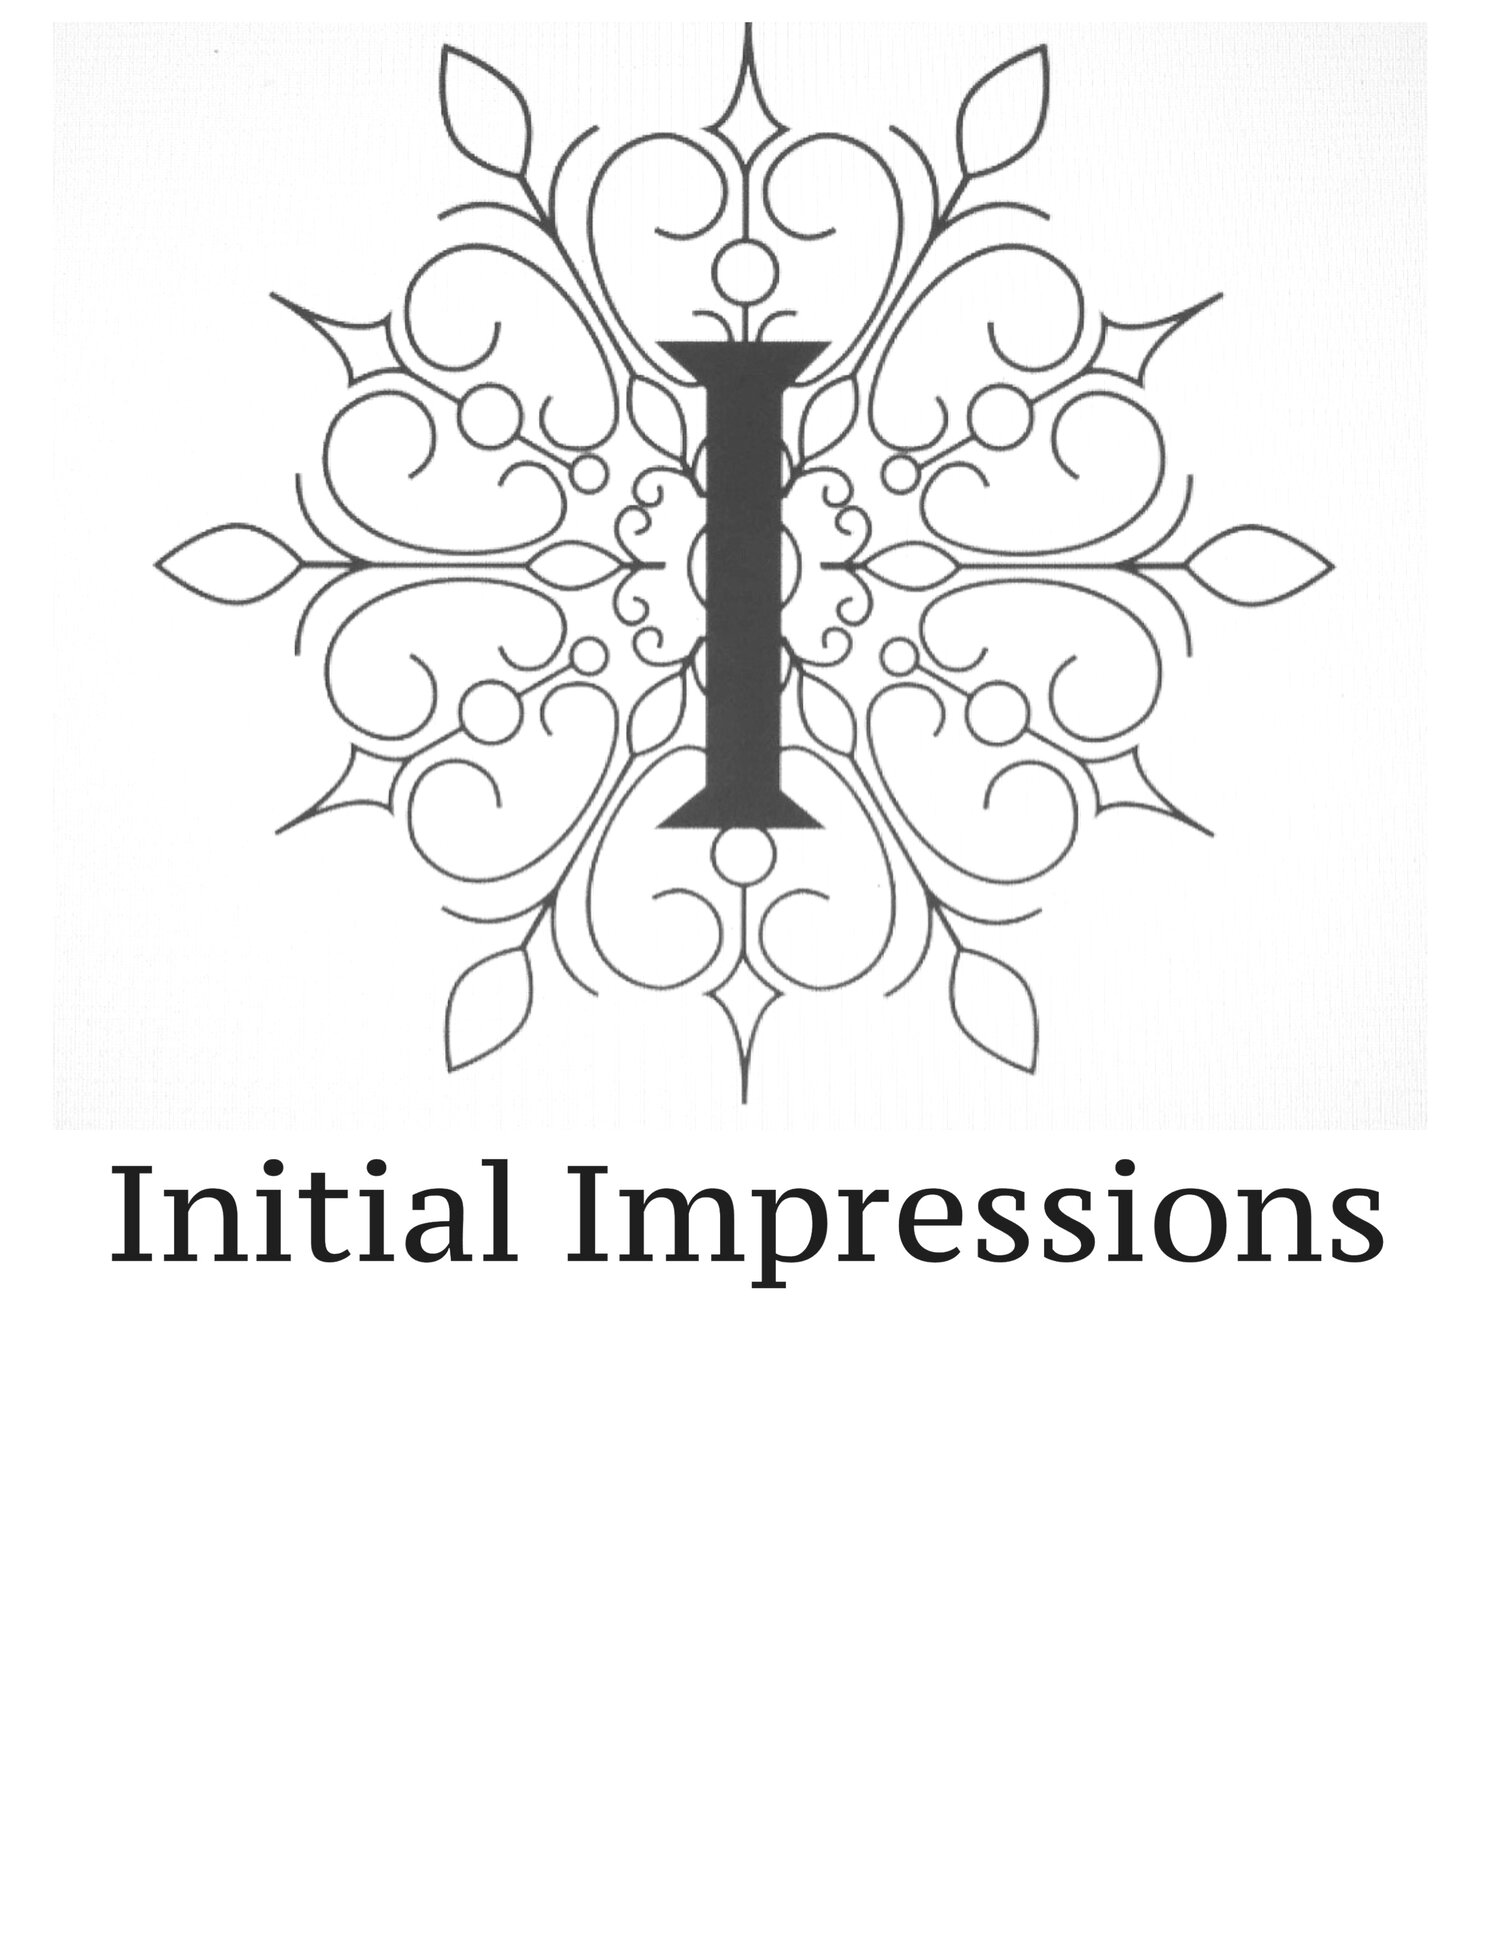 Initial Impressions